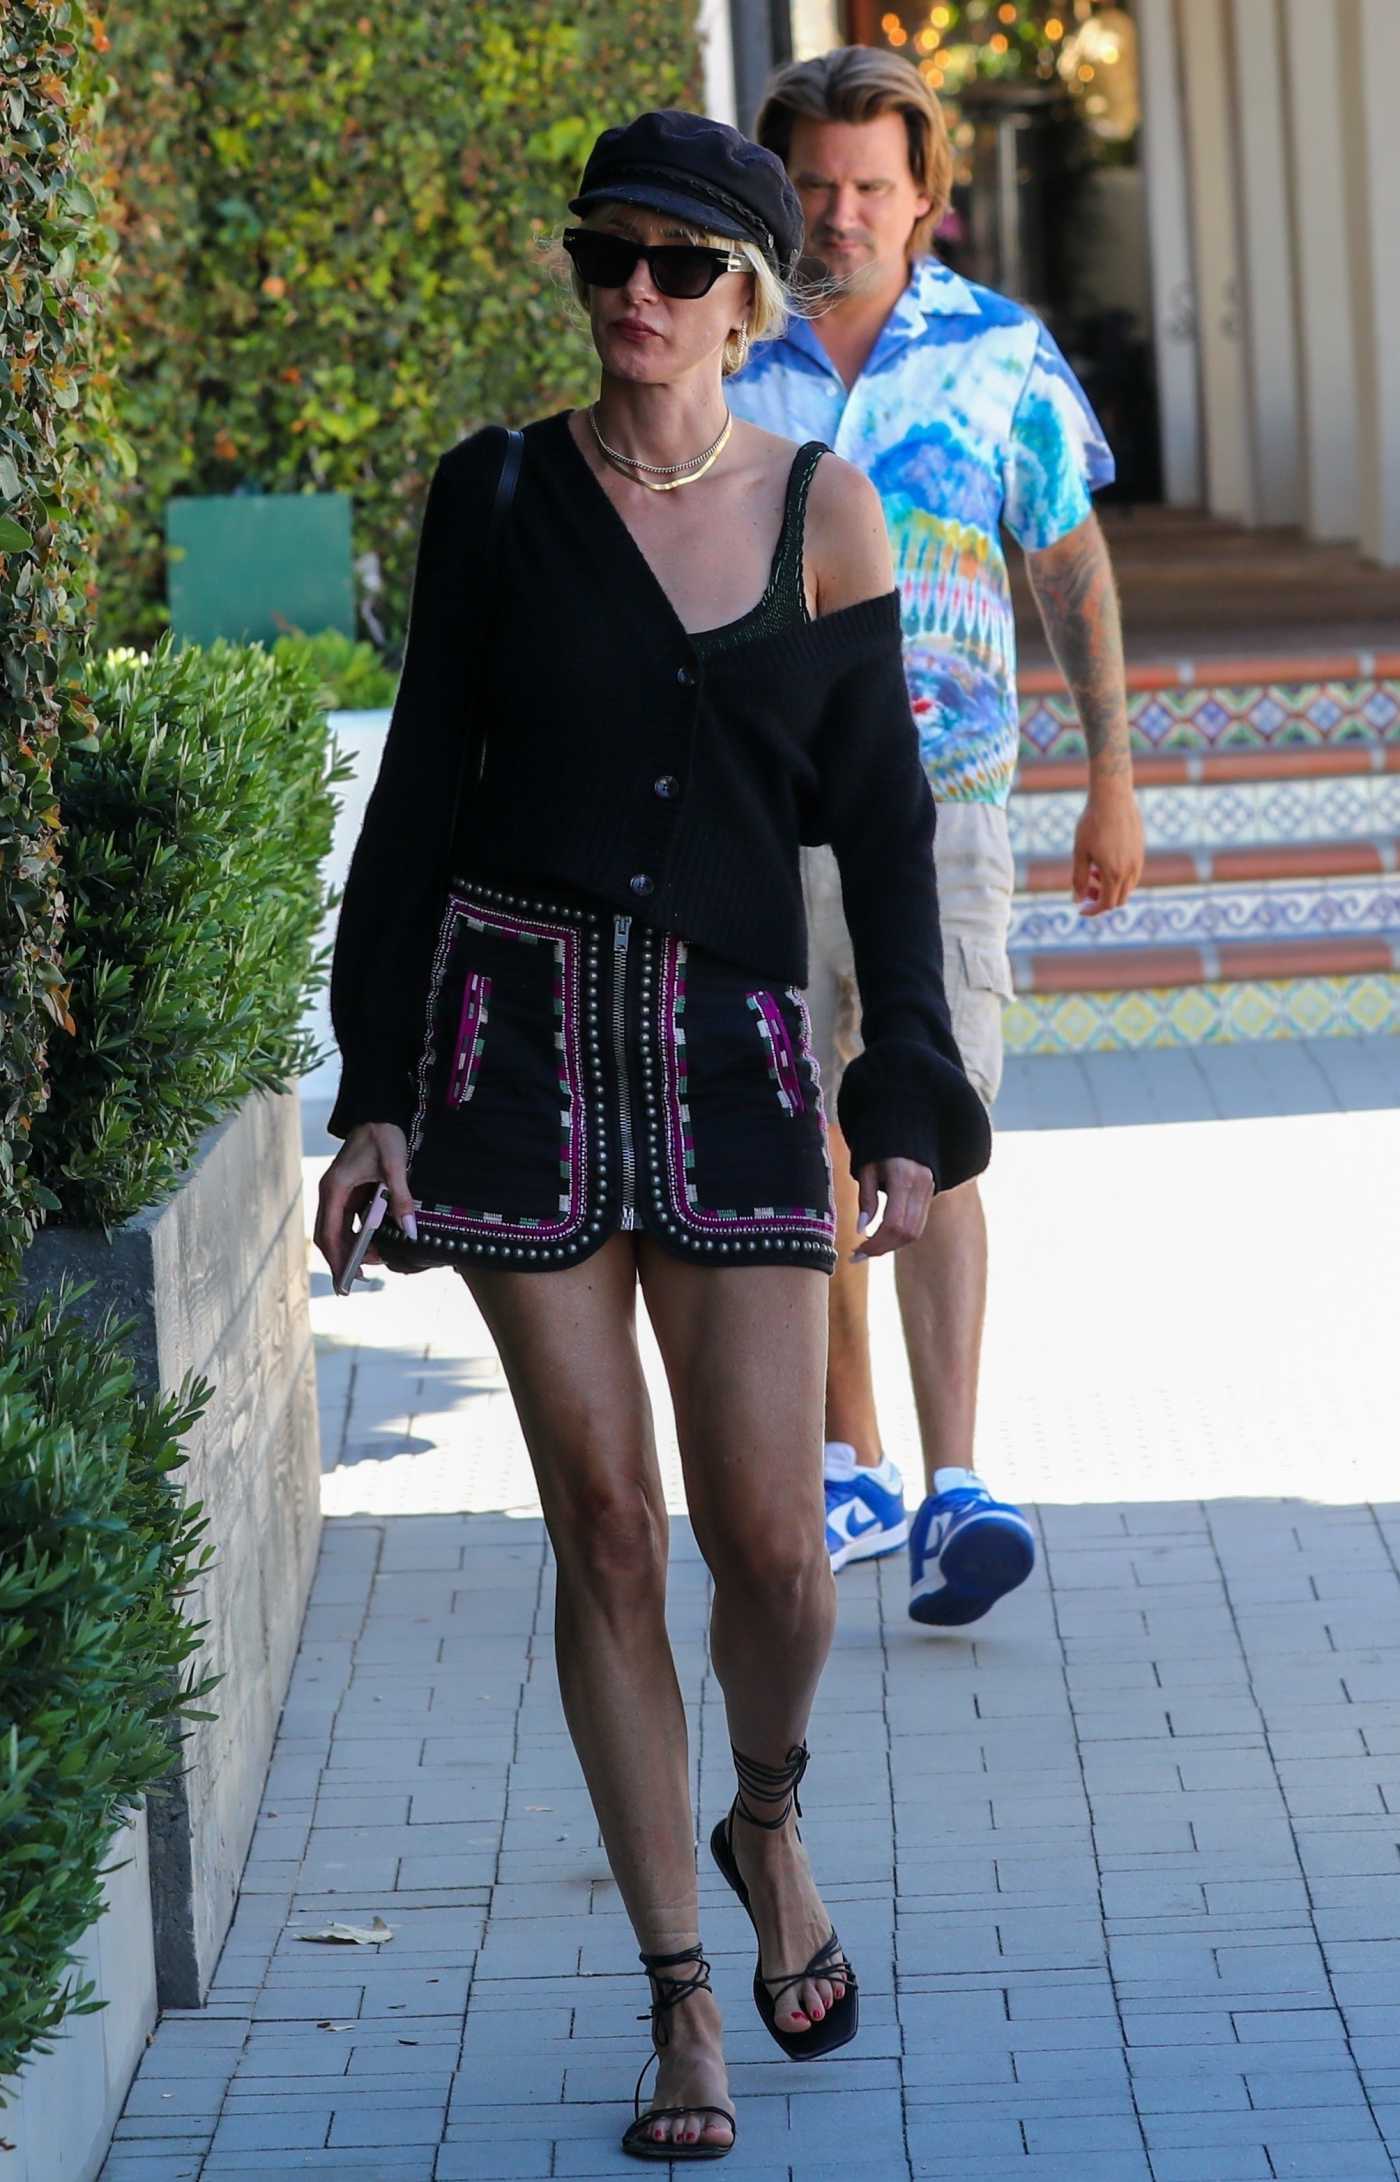 Kimberly Stewart in a Black Cap Goes Shopping in Malibu 07/10/2022